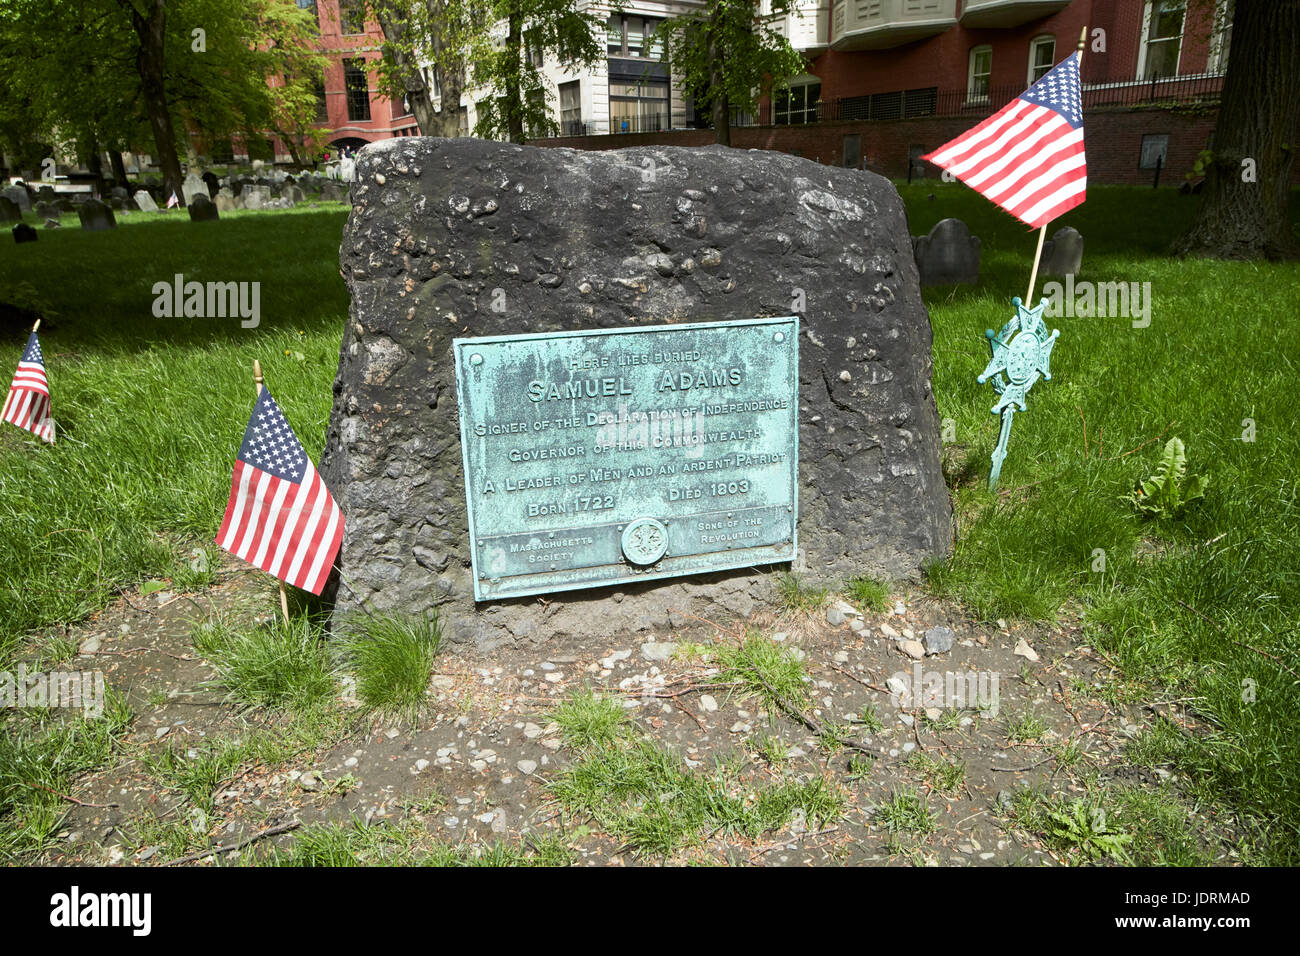 grave of samuel adams Granary Burying ground Boston USA Stock Photo